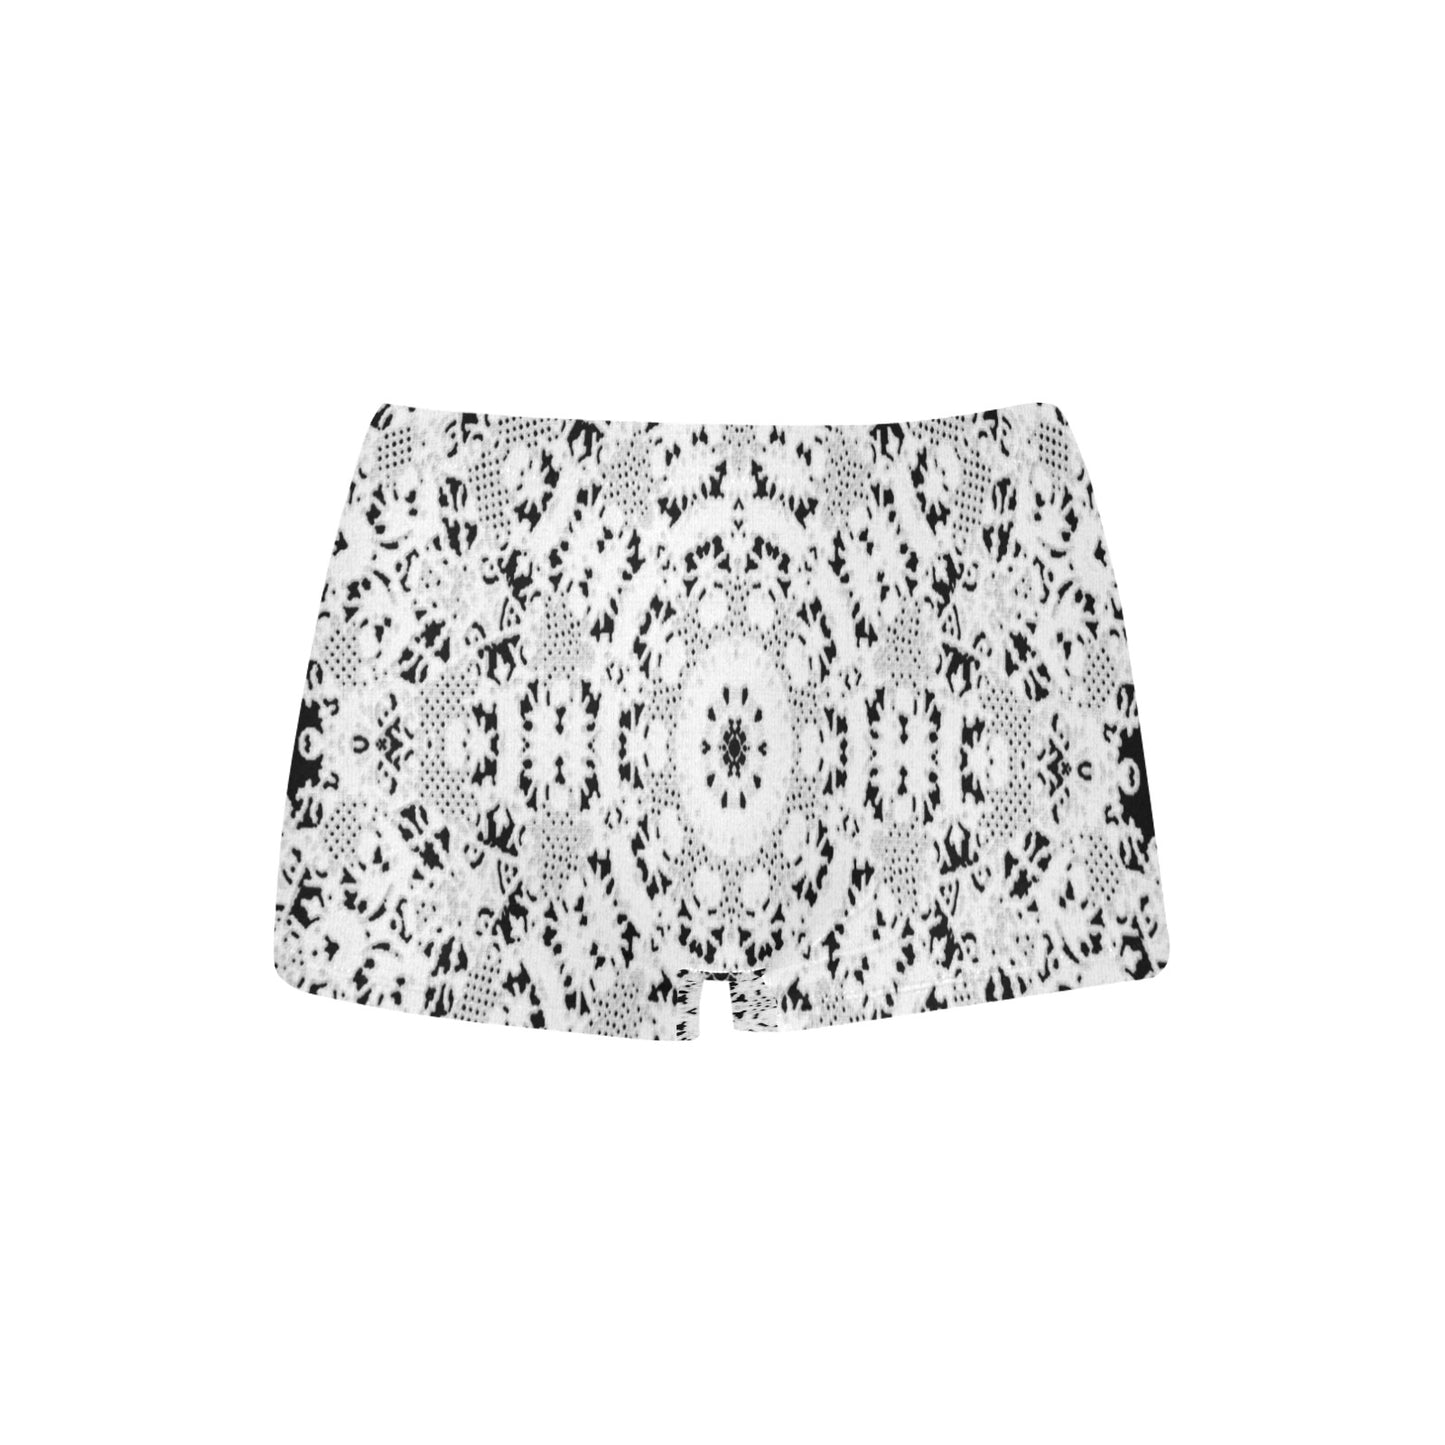 Printed Lace Boyshorts, daisy dukes, pum pum shorts, shortie shorts , design 50